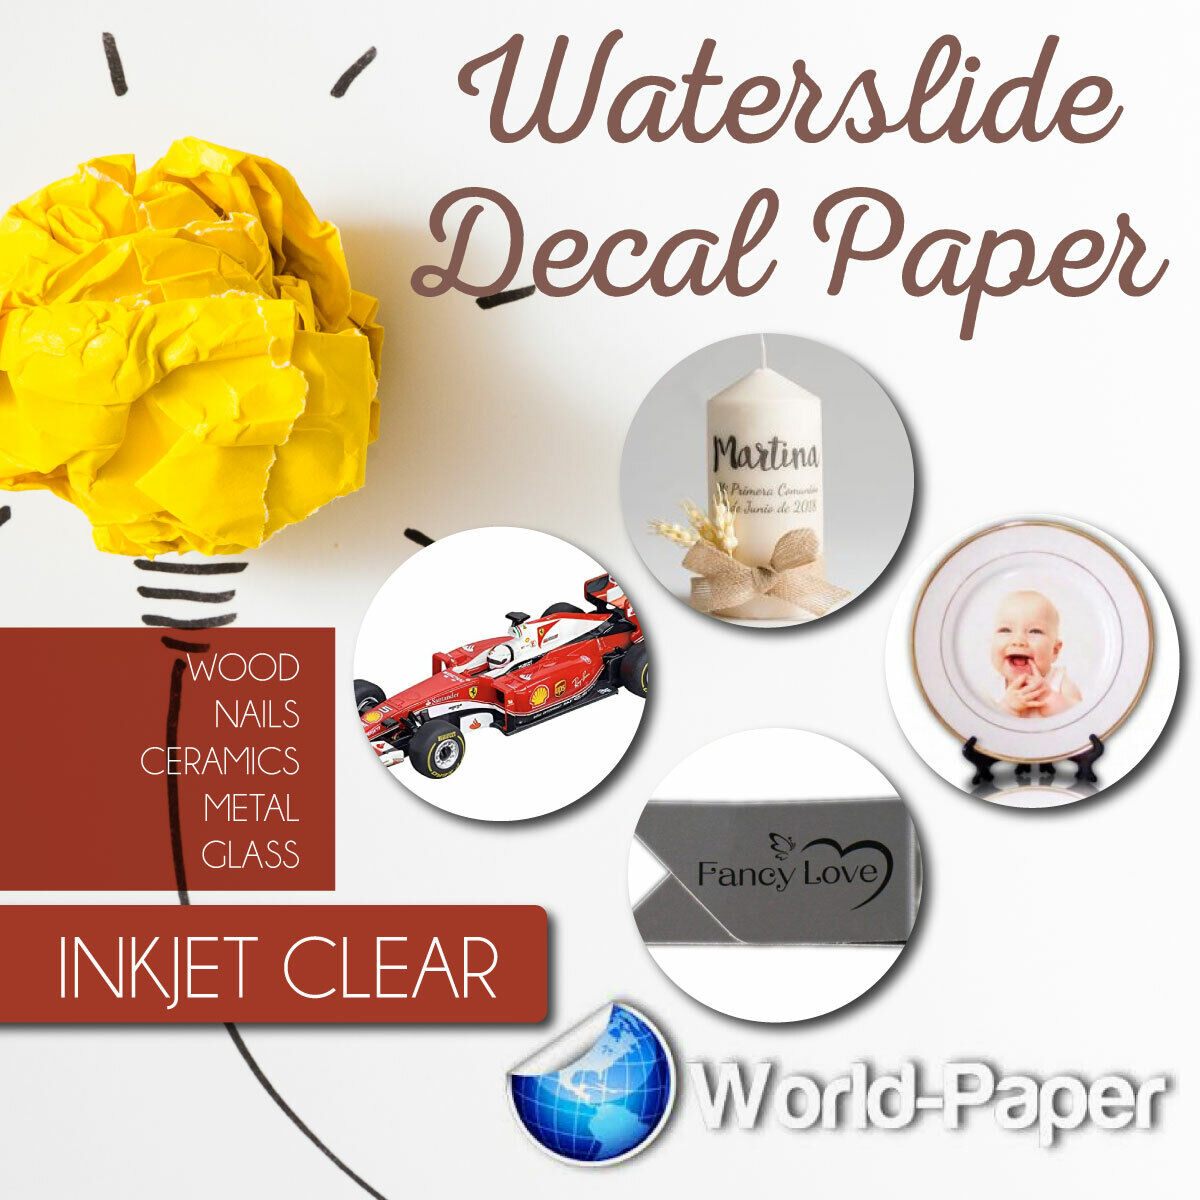 INKJET CLEAR  Waterslide Model, Ceramic, Decal Paper 10 sheets 8.5x11 #1